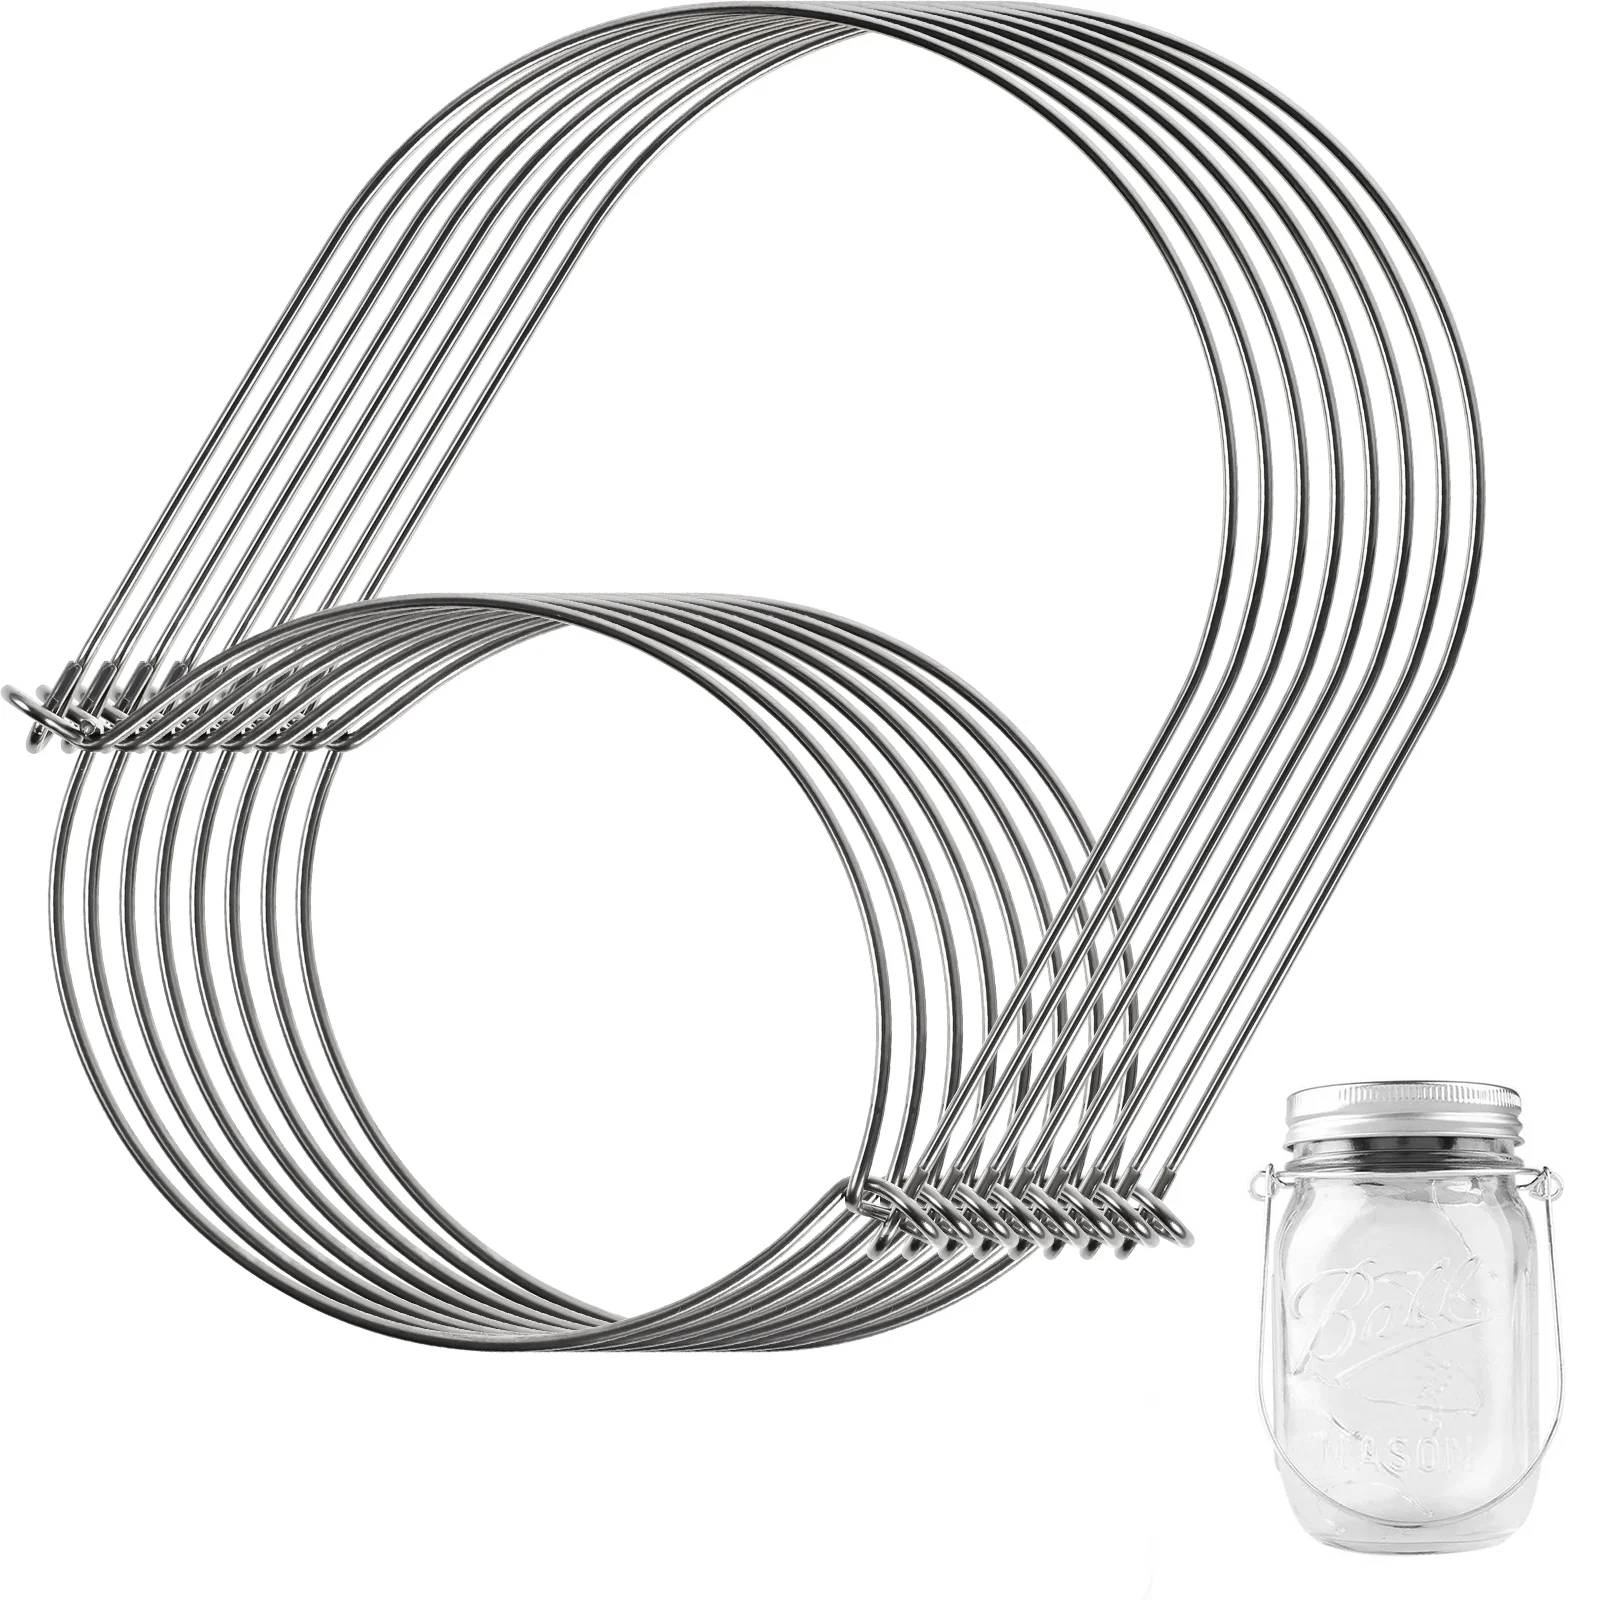 

8 Pcs Mason Jar Wire Hangers Stainless Steel Wire Handles Canning Jars Hangers for Regular Mason Jar